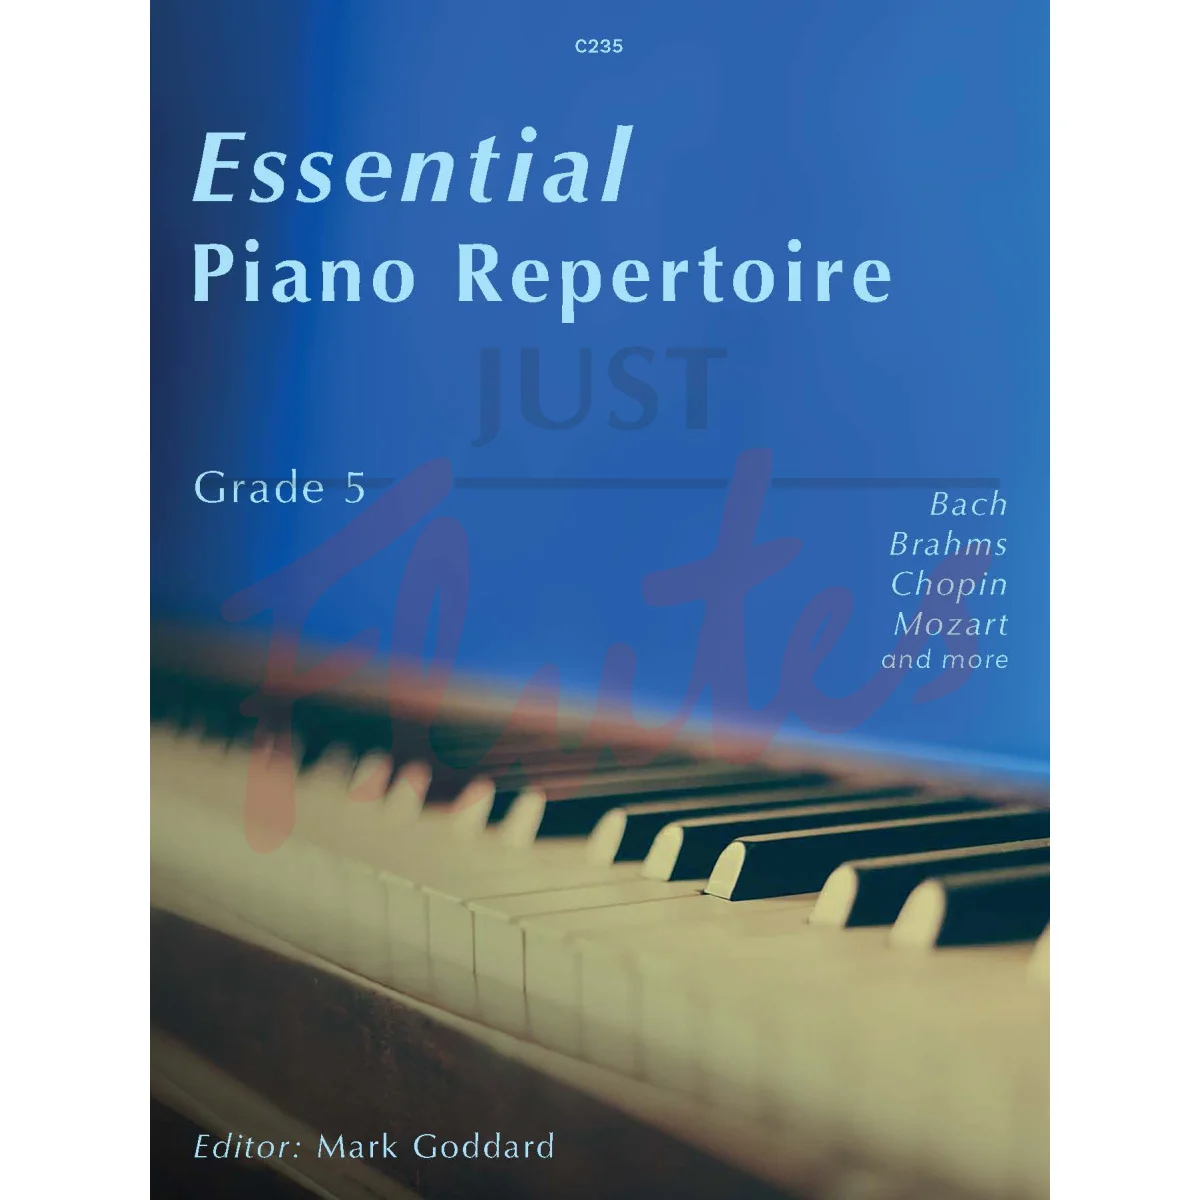 Essential Piano Repertoire: Grade 5